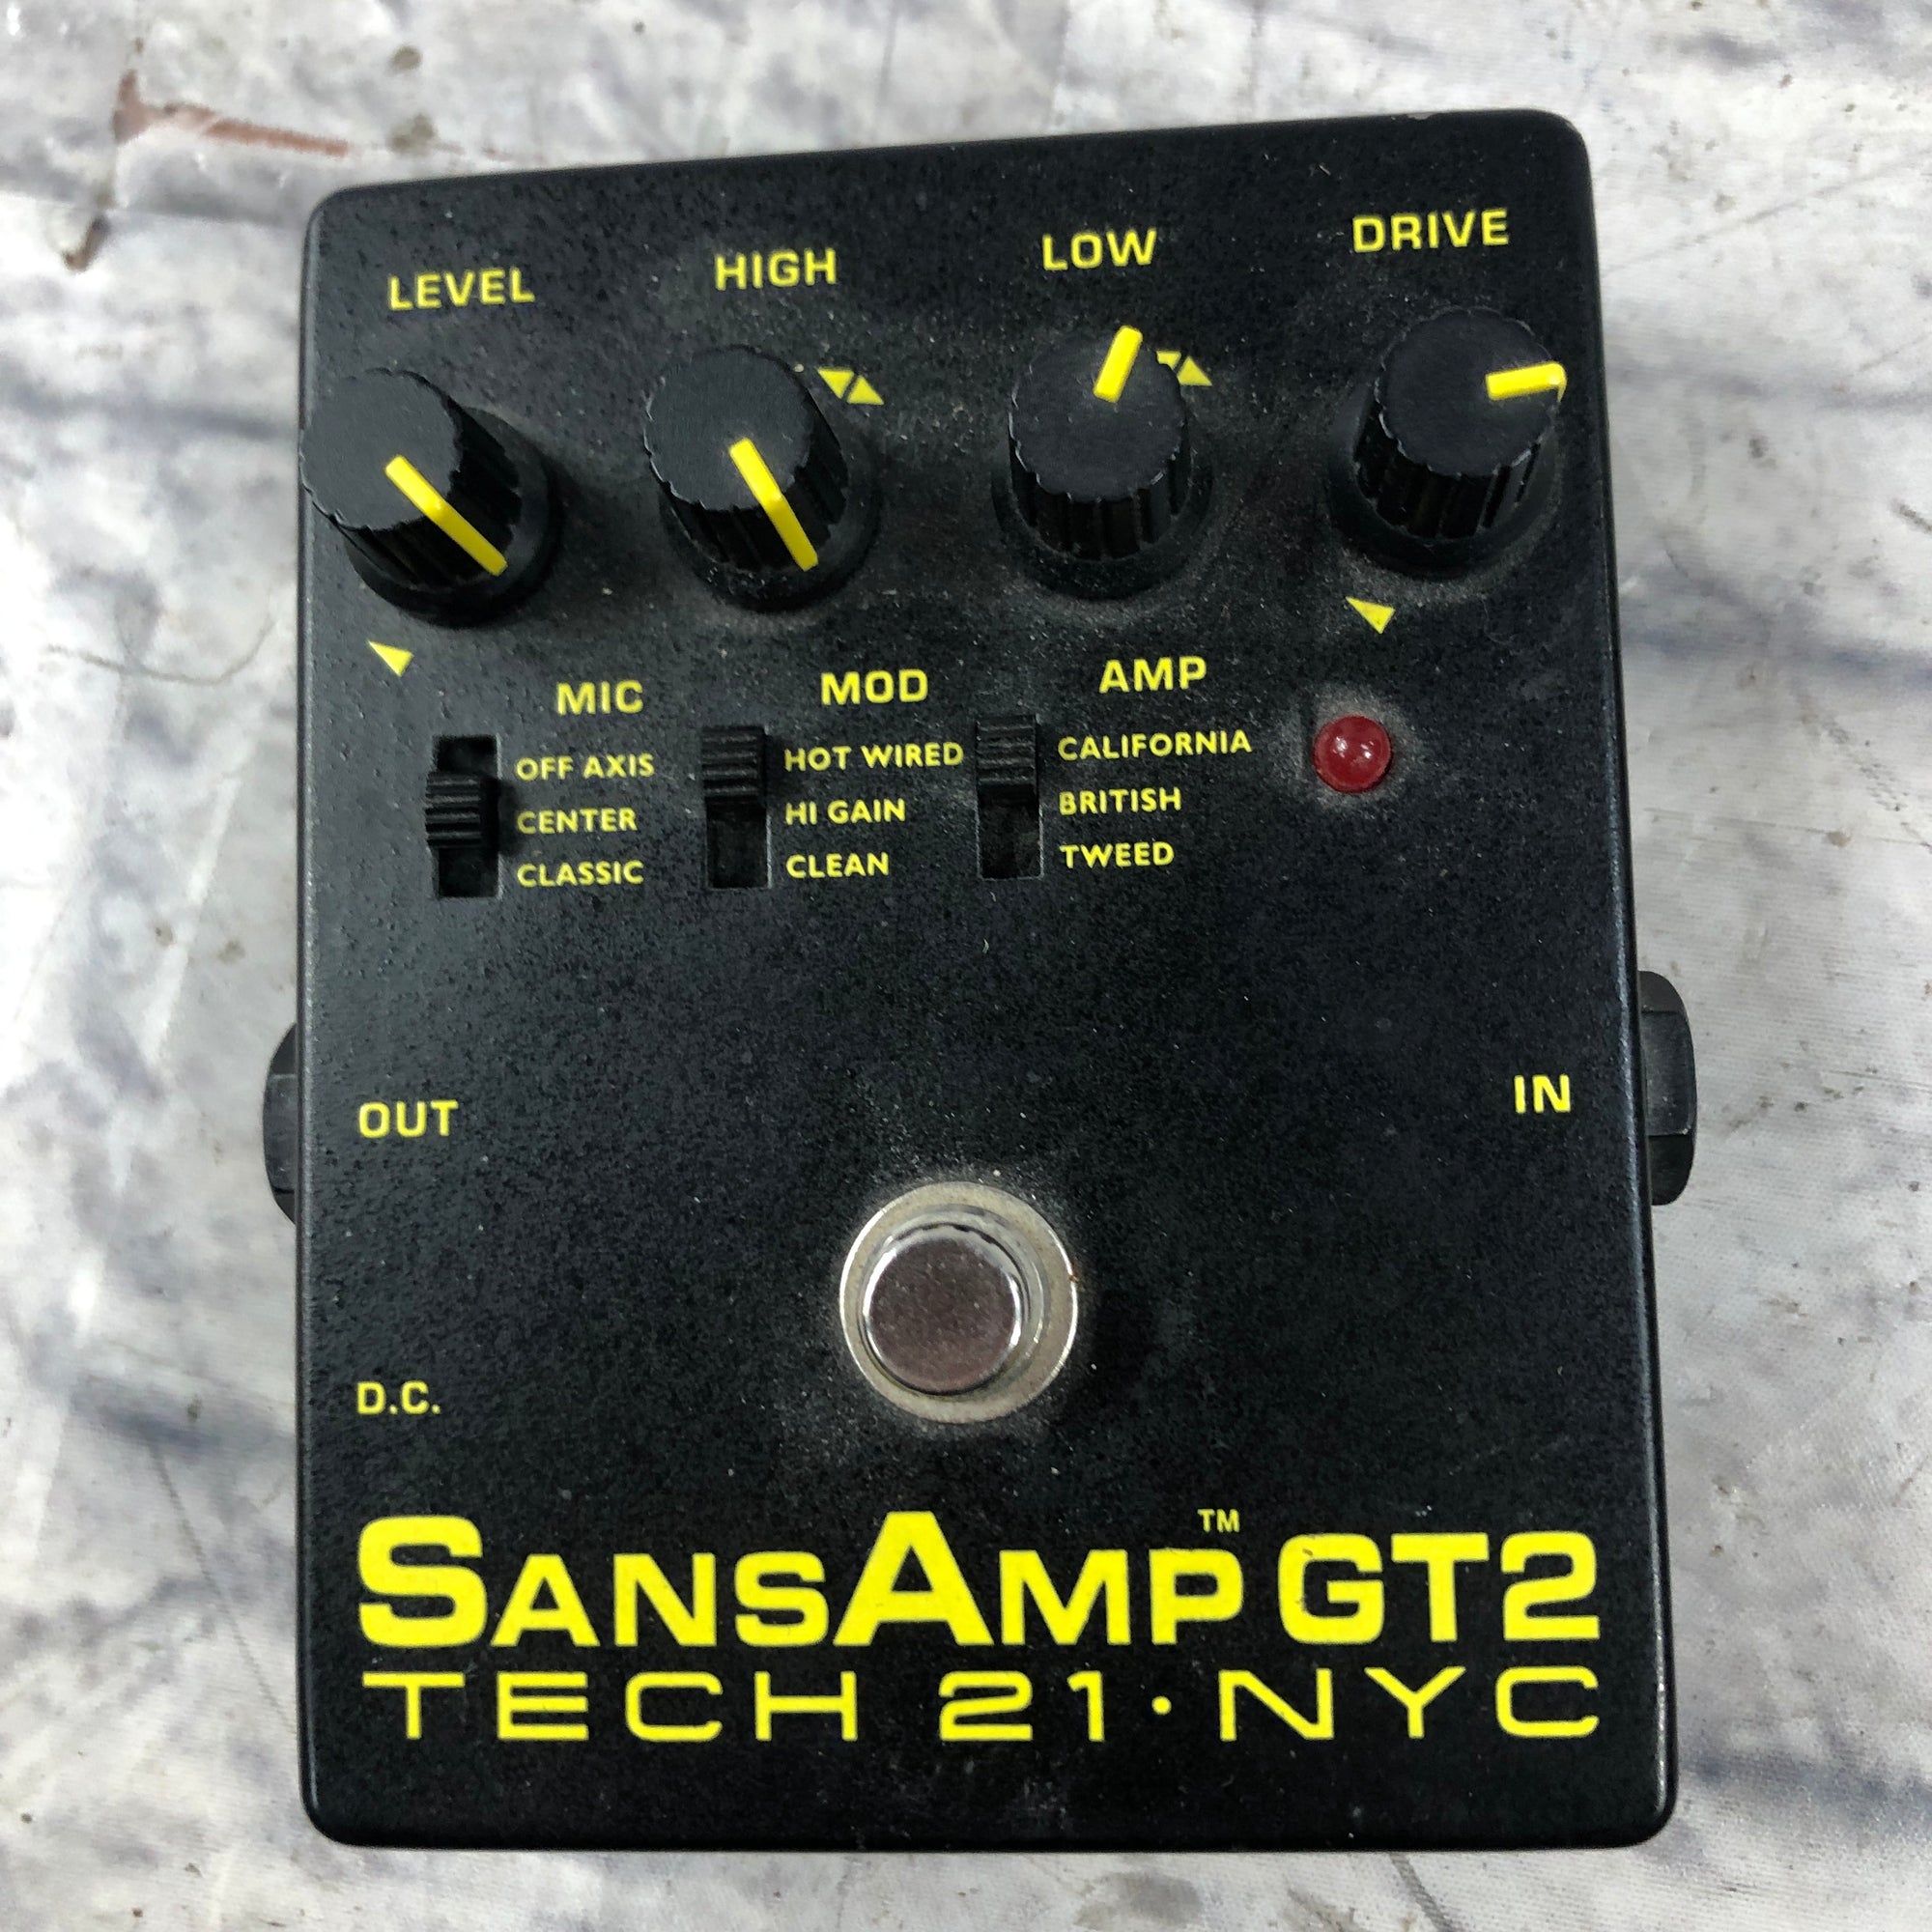 Tech21 NYC SANSAMP GT2 セール 登場から人気沸騰 - ギター